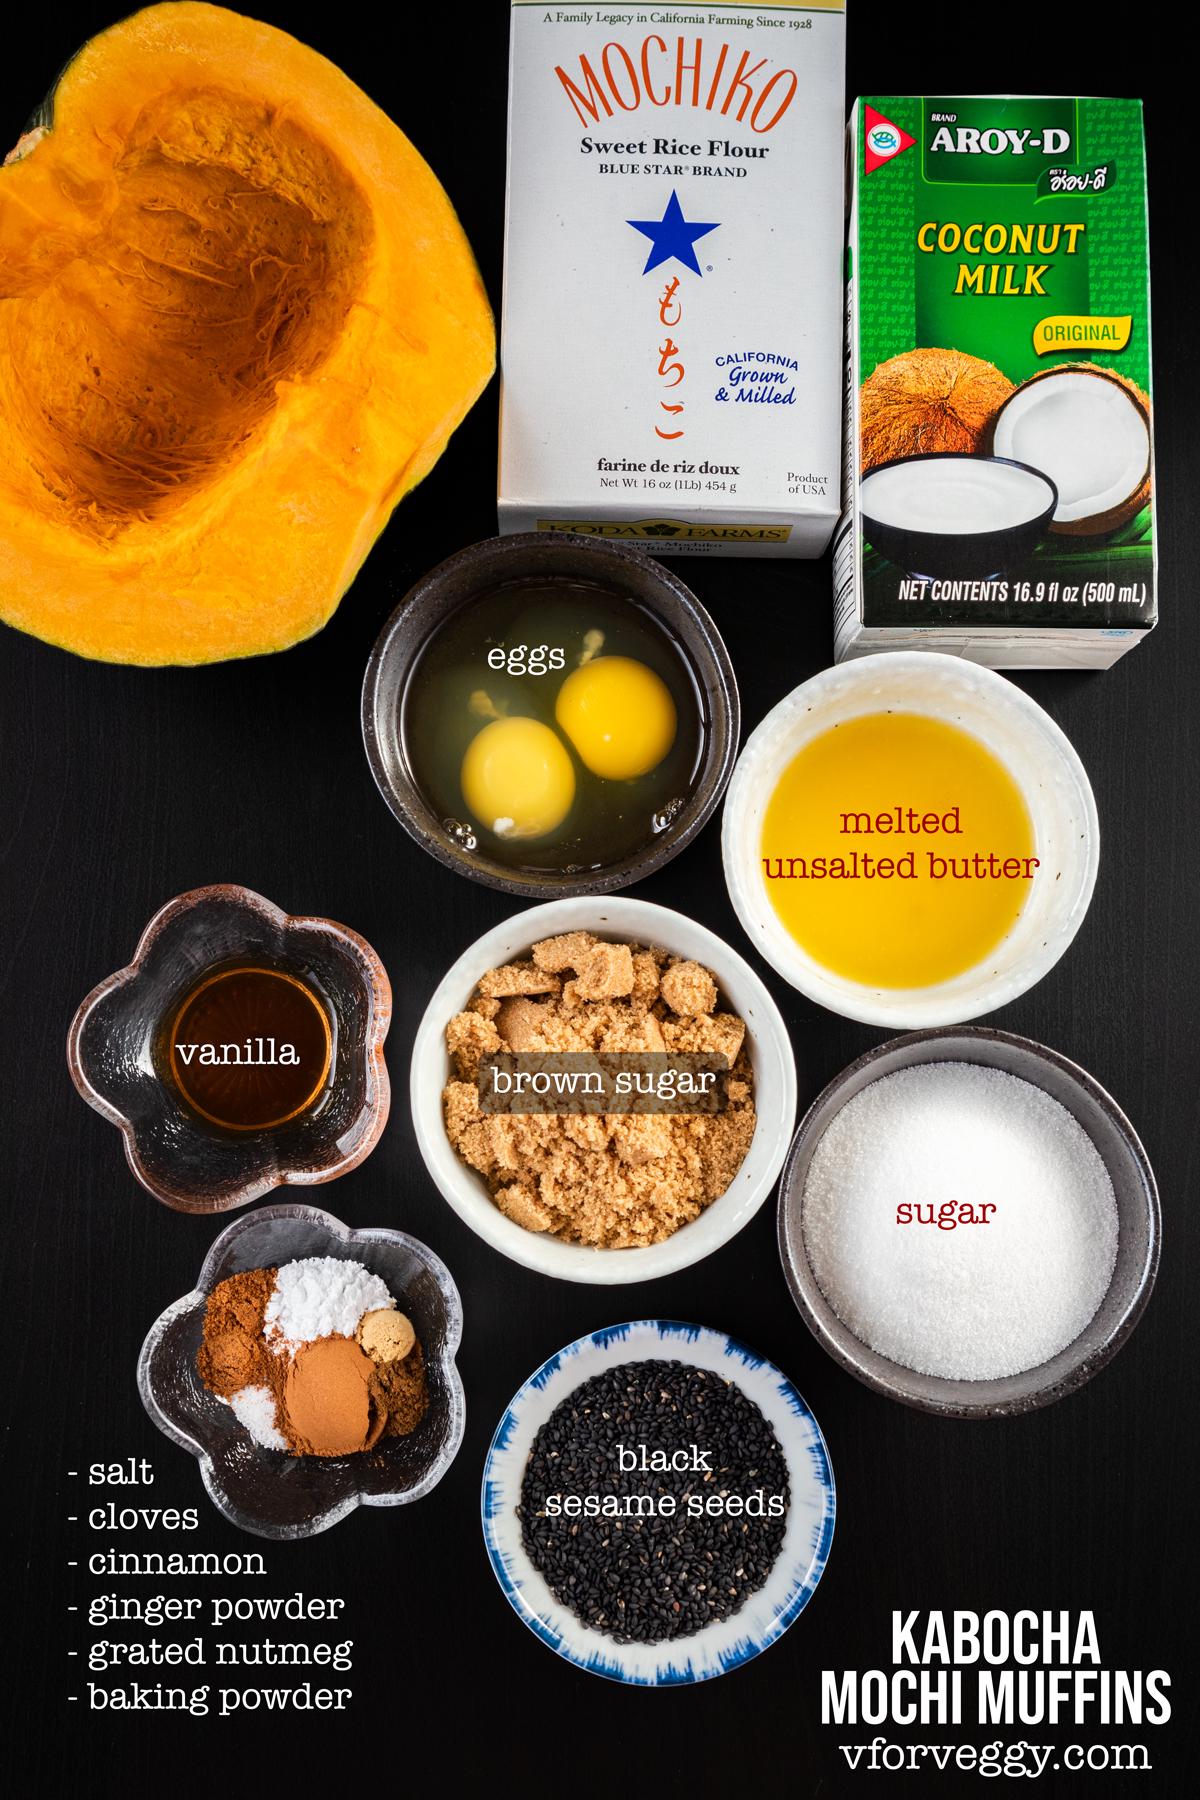 Ingredients for kabocha mochi muffins: kabocha, coconut milk, unsalted butter, eggs, vanilla, mochiko, sugar, brown sugar, baking powder, cinnamon, nutmeg, ginger, cloves, and salt.